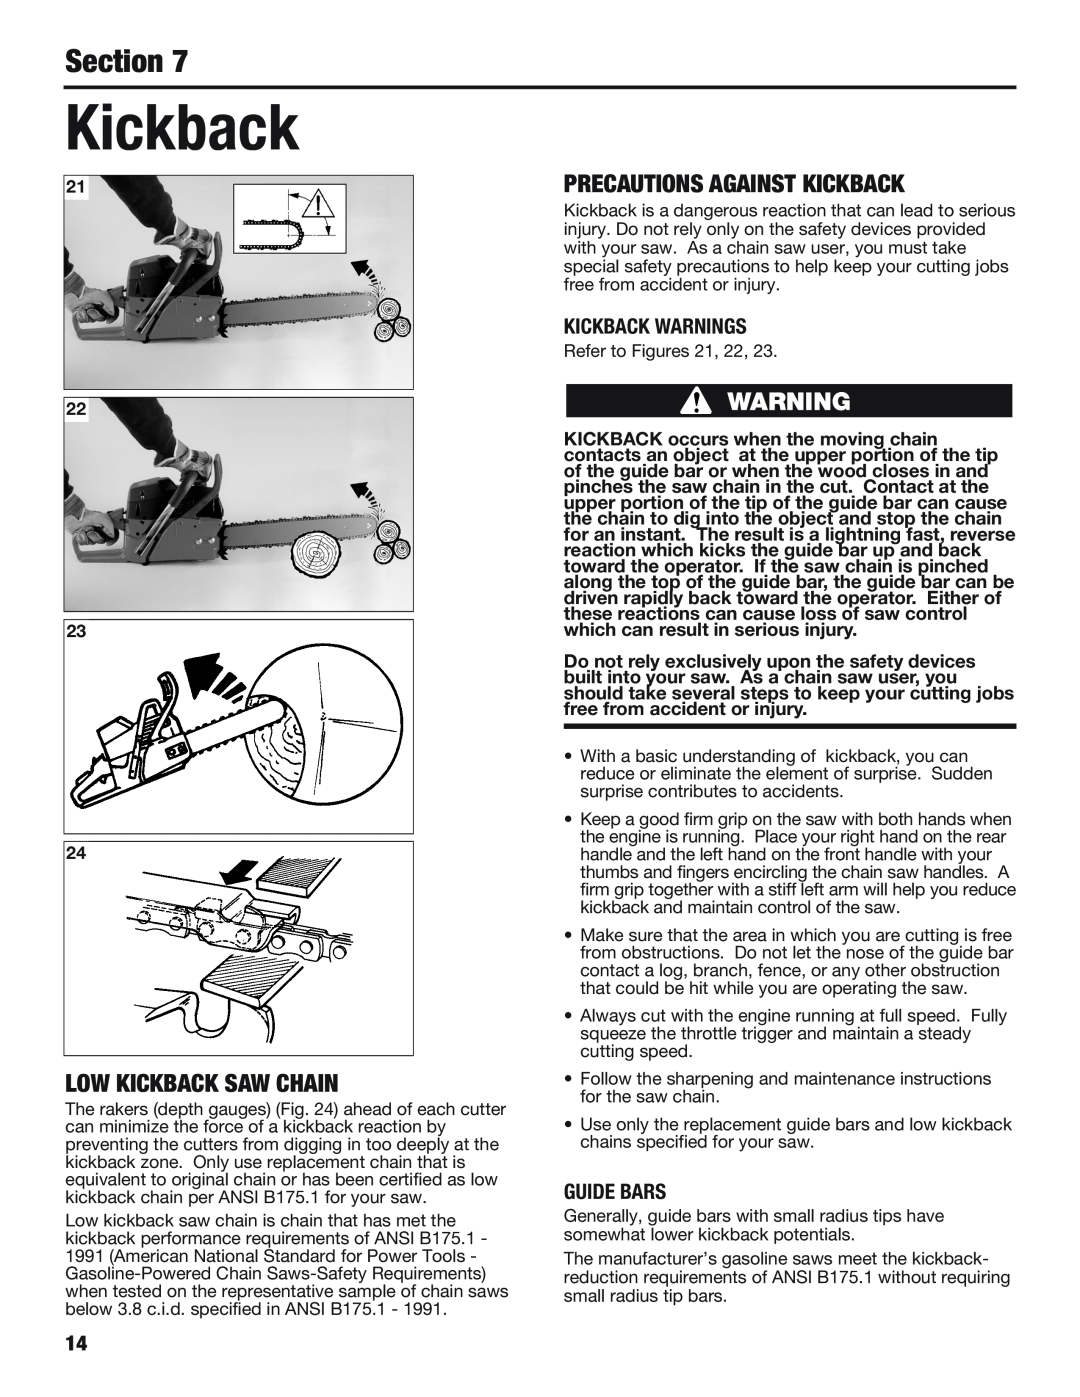 Cub Cadet CS5720 manual Low Kickback Saw Chain, Precautions Against Kickback, Kickback Warnings, Guide Bars, Section 